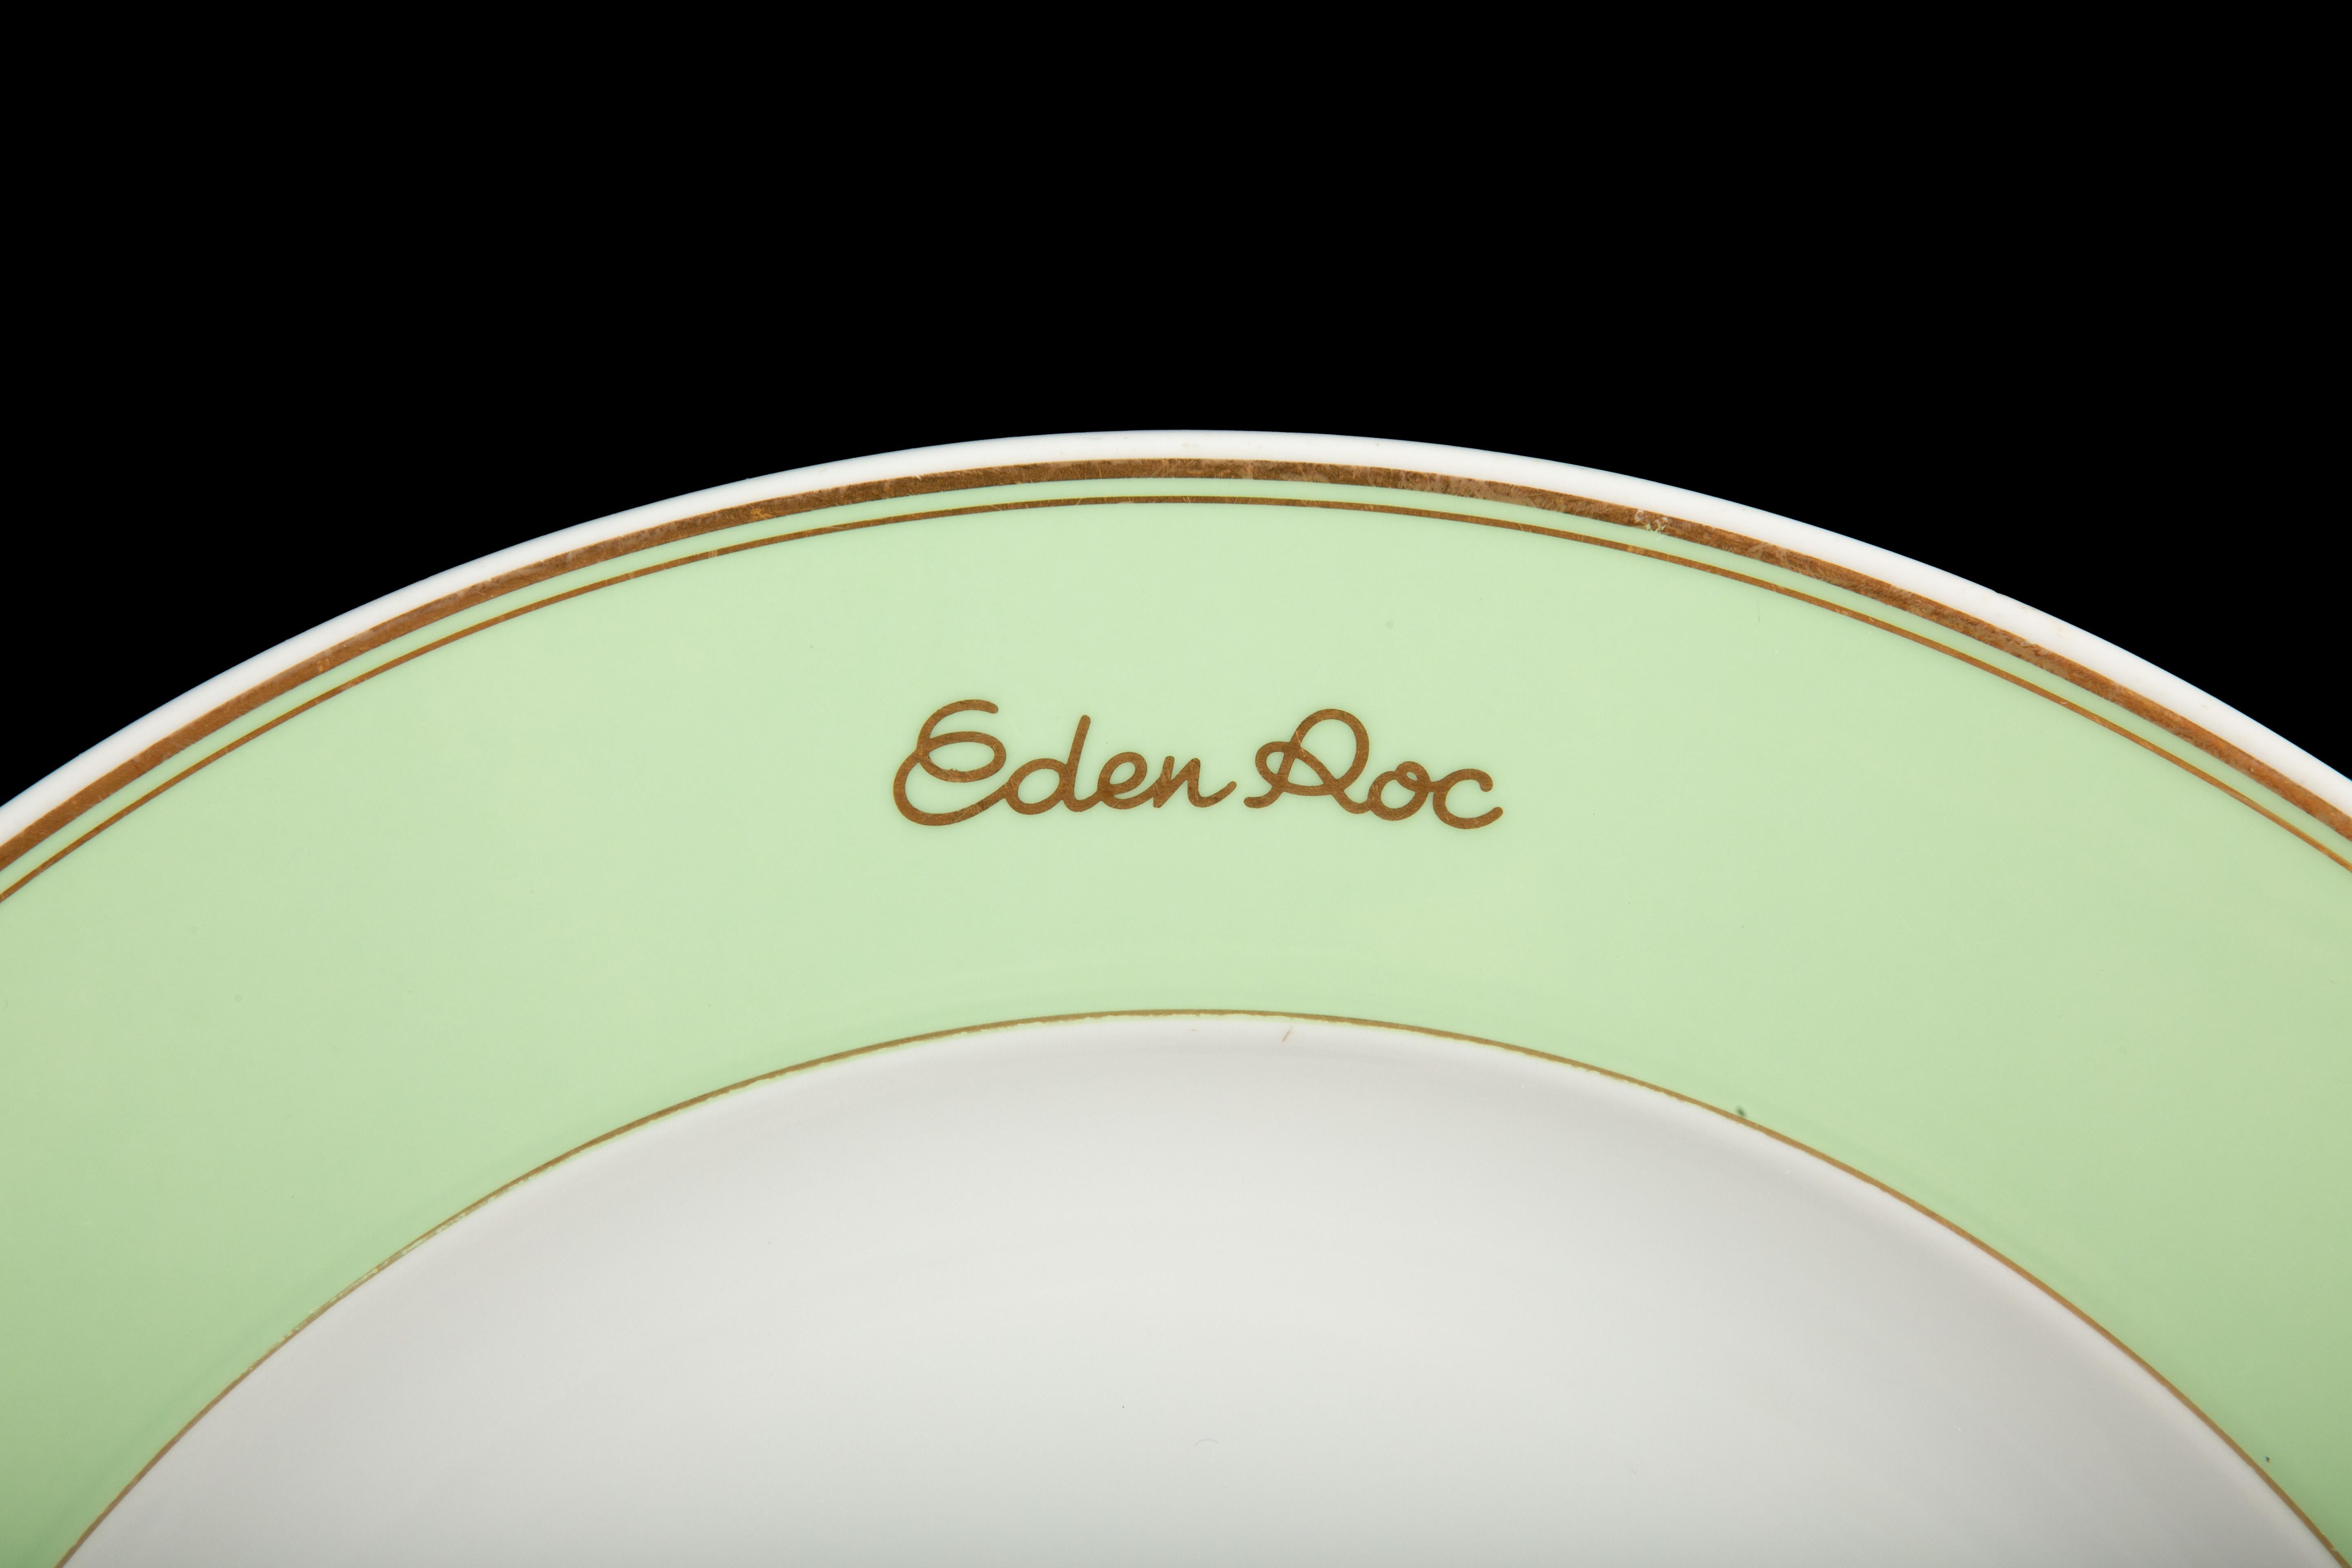 Louis XVI Hotel du Cap-Eden-Roc Dinner Plate: A Taste of Elegance and History 10